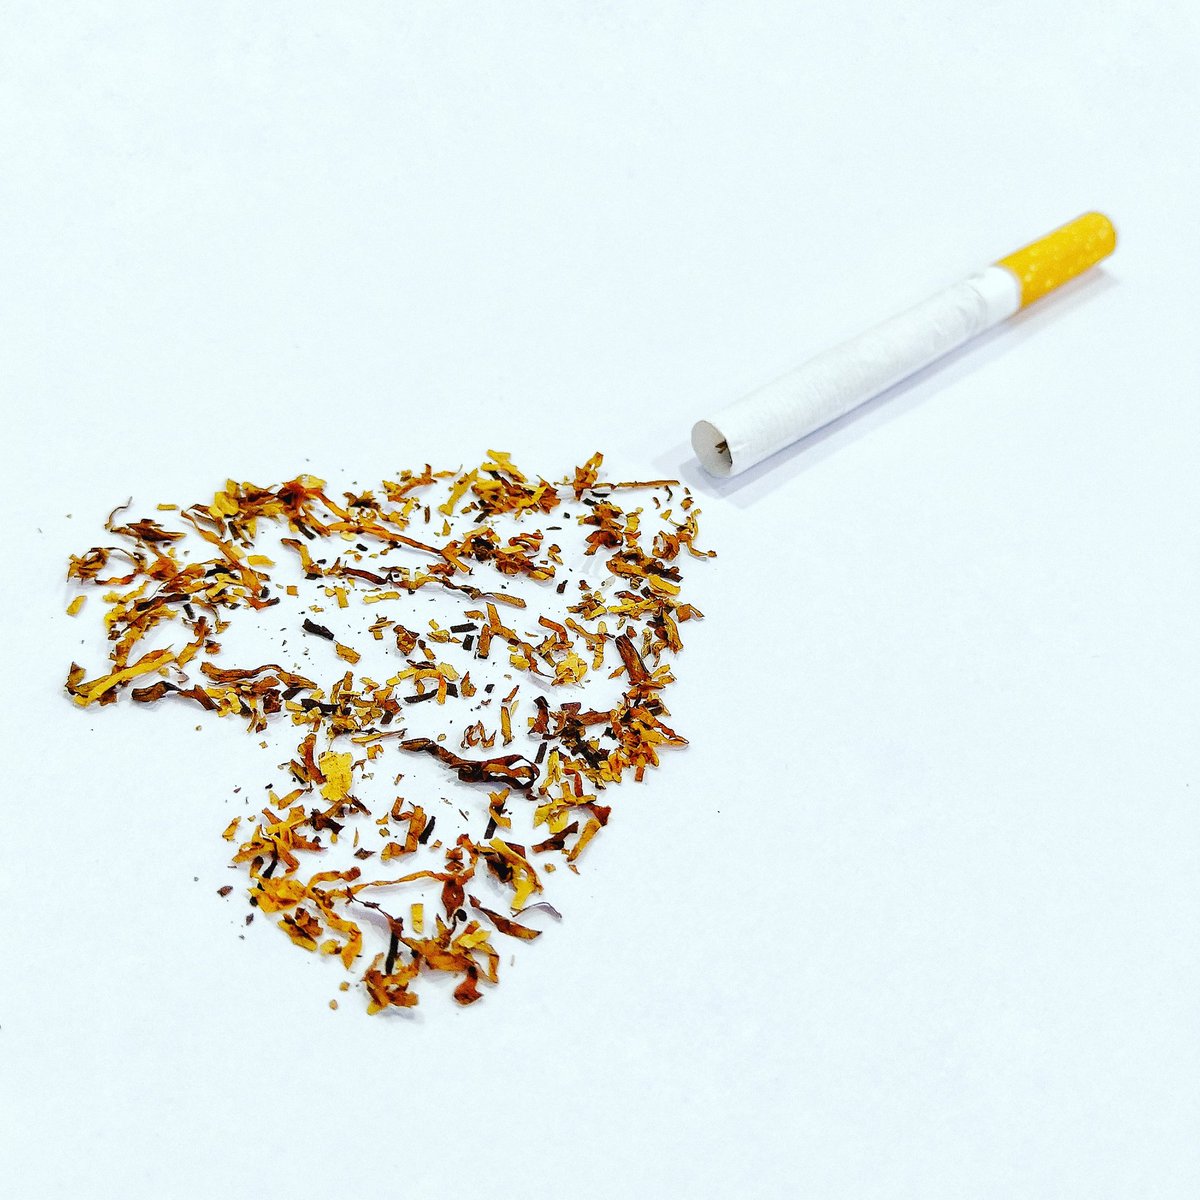 Cigarette love
#JEGPHOTOGRAPHY #JEG9220
#cigarettes #cigarette #love #lovesmoke #marlboro #white